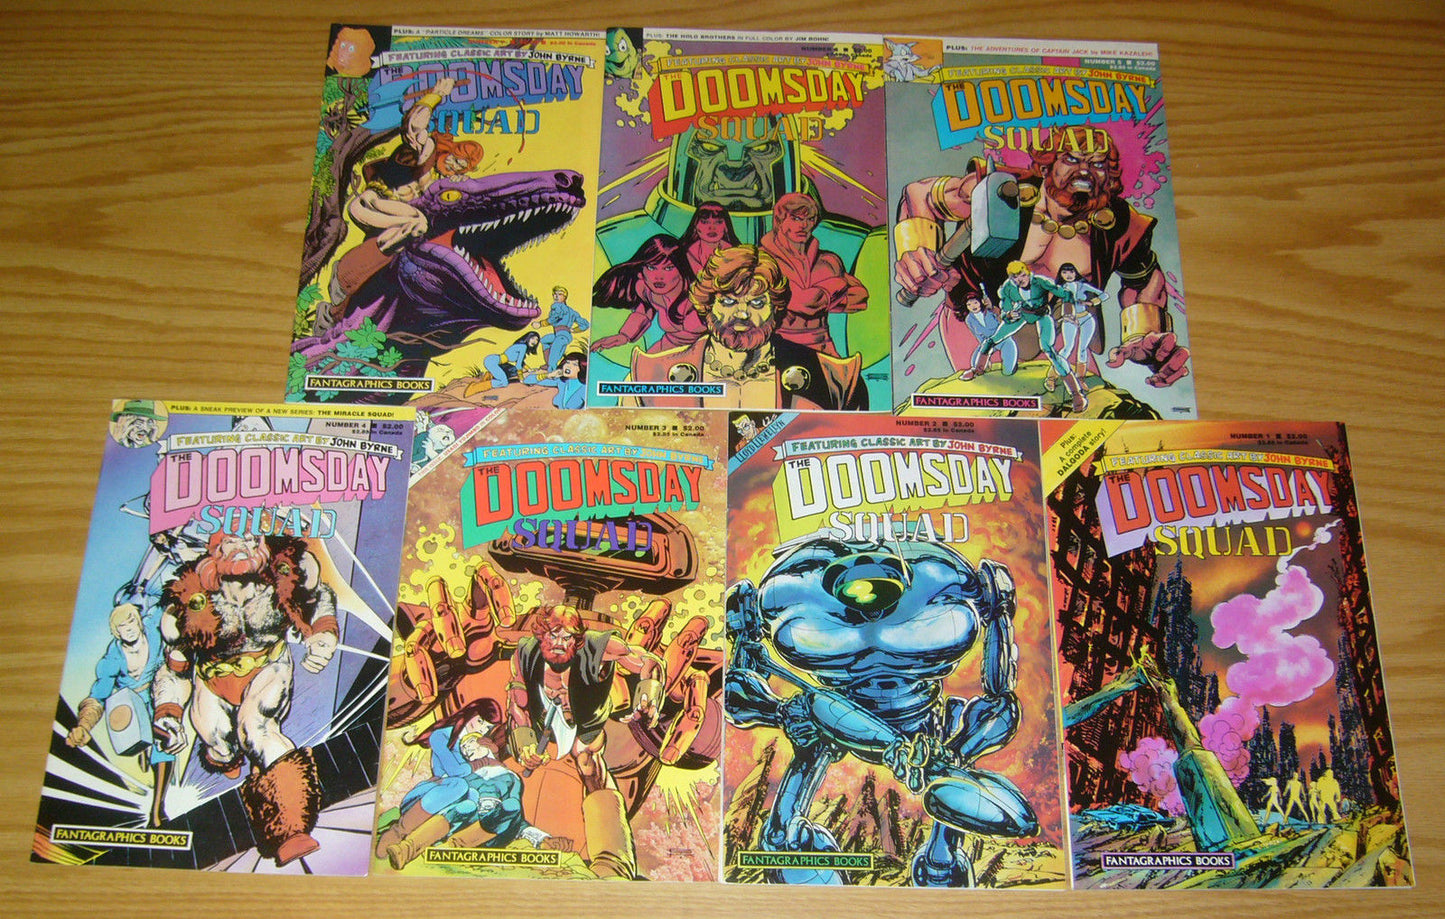 The Doomsday Squad #1-7